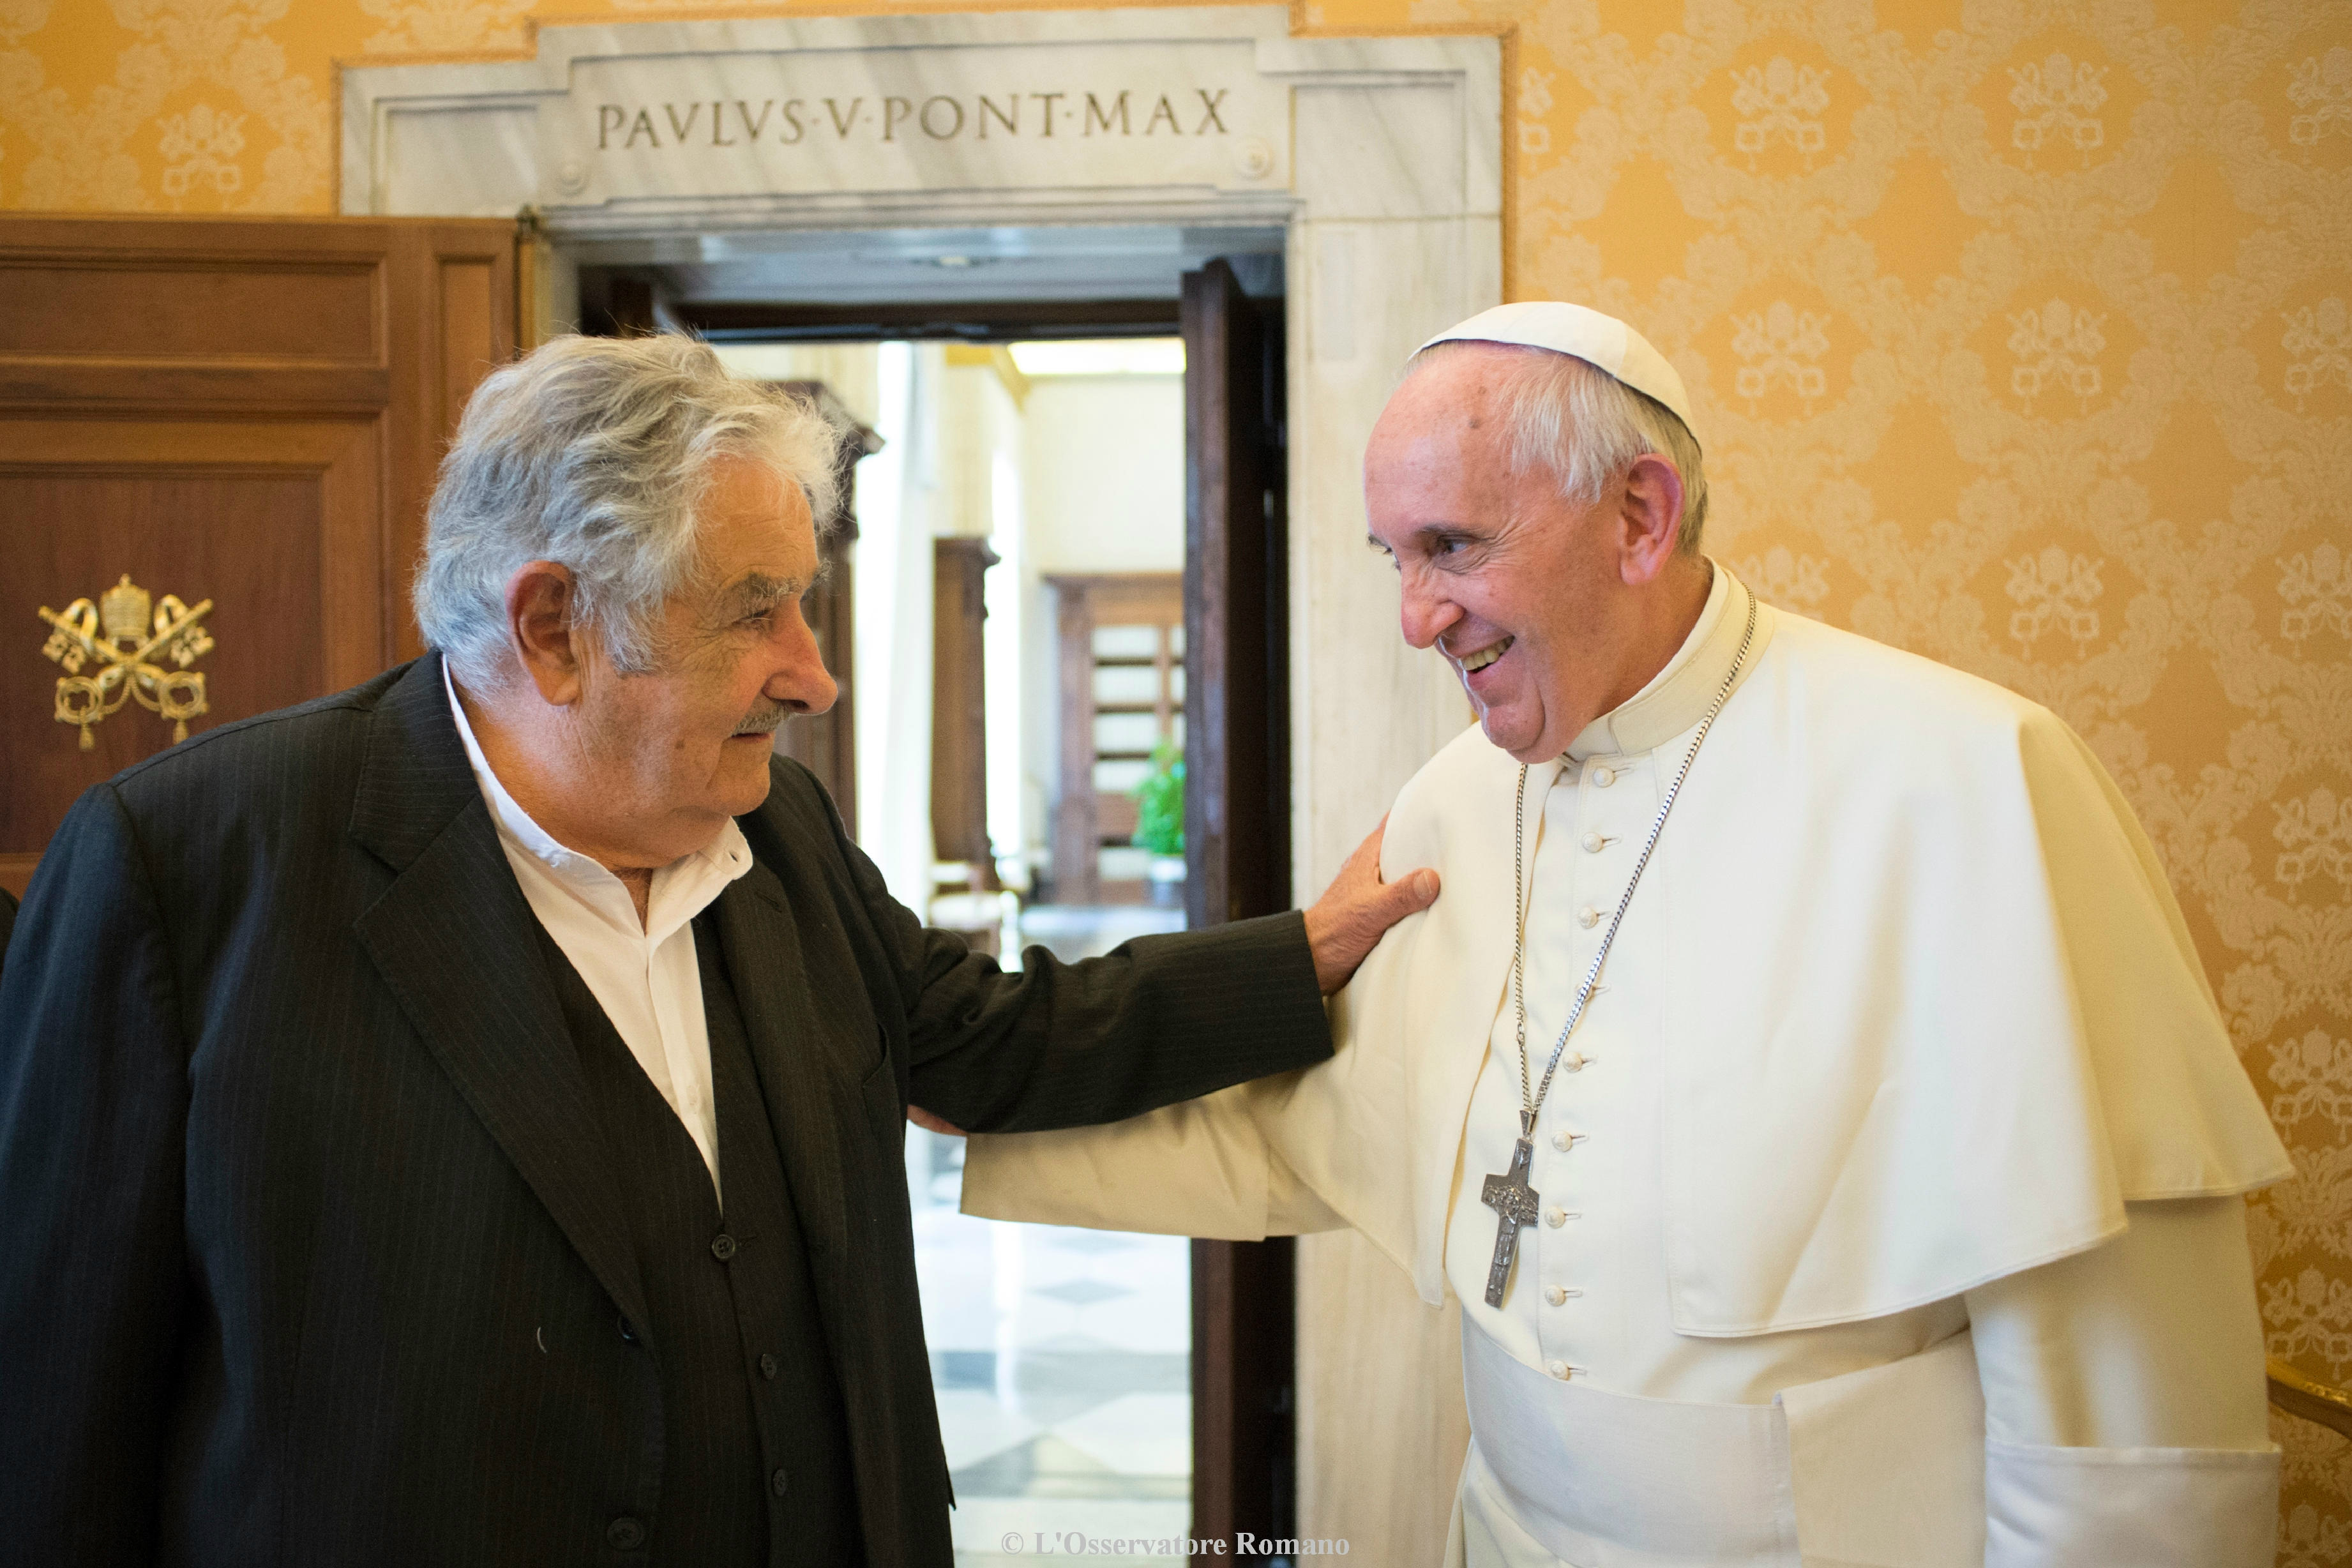 Pope Francis receives in audience Senator Jose "Pepe" Mujica Cordano